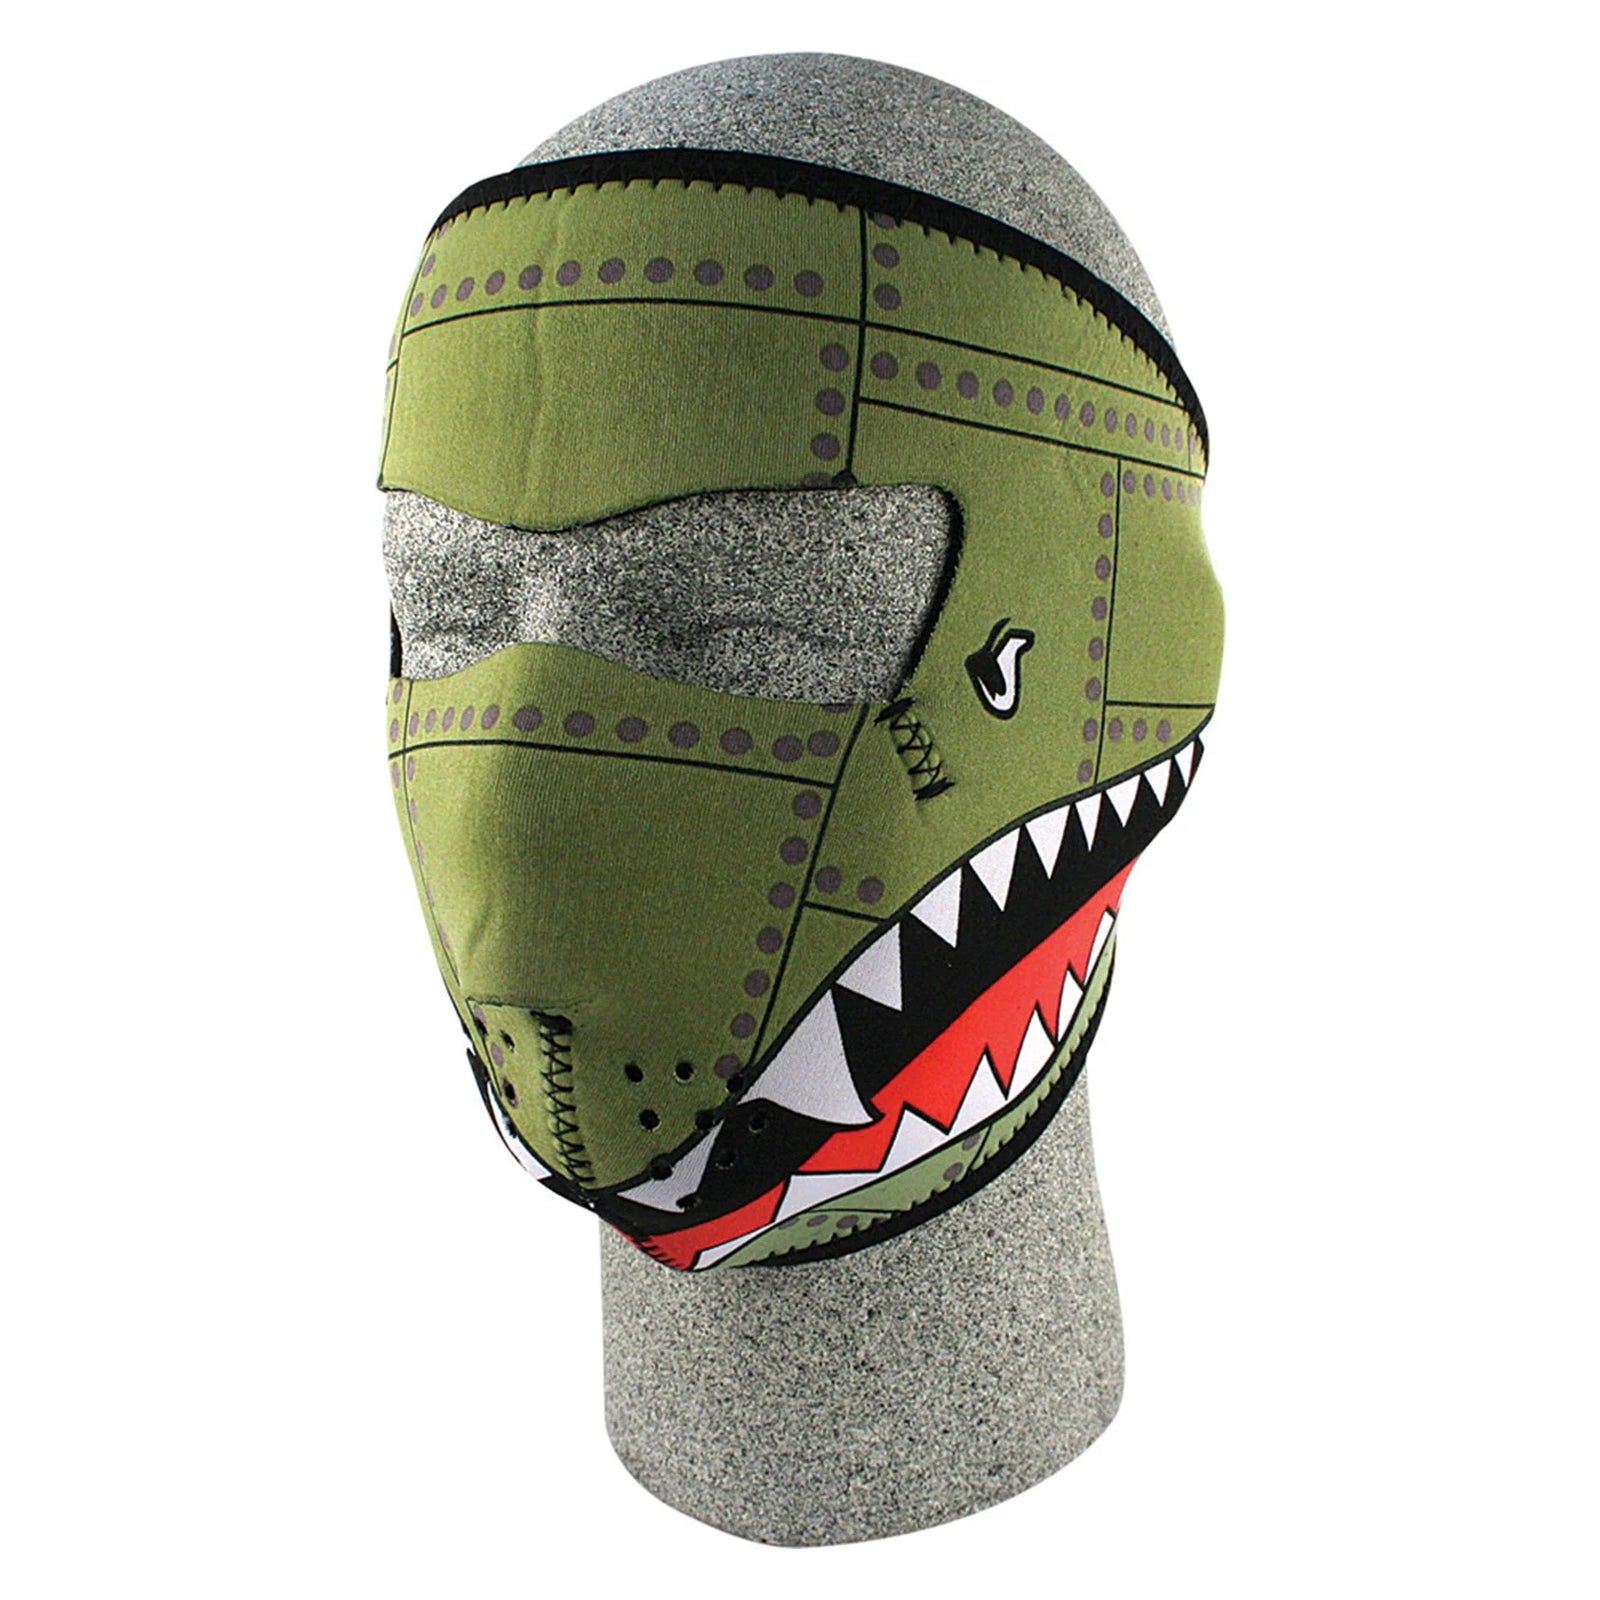 Zan Headgear Neoprene Full Adult Face Masks